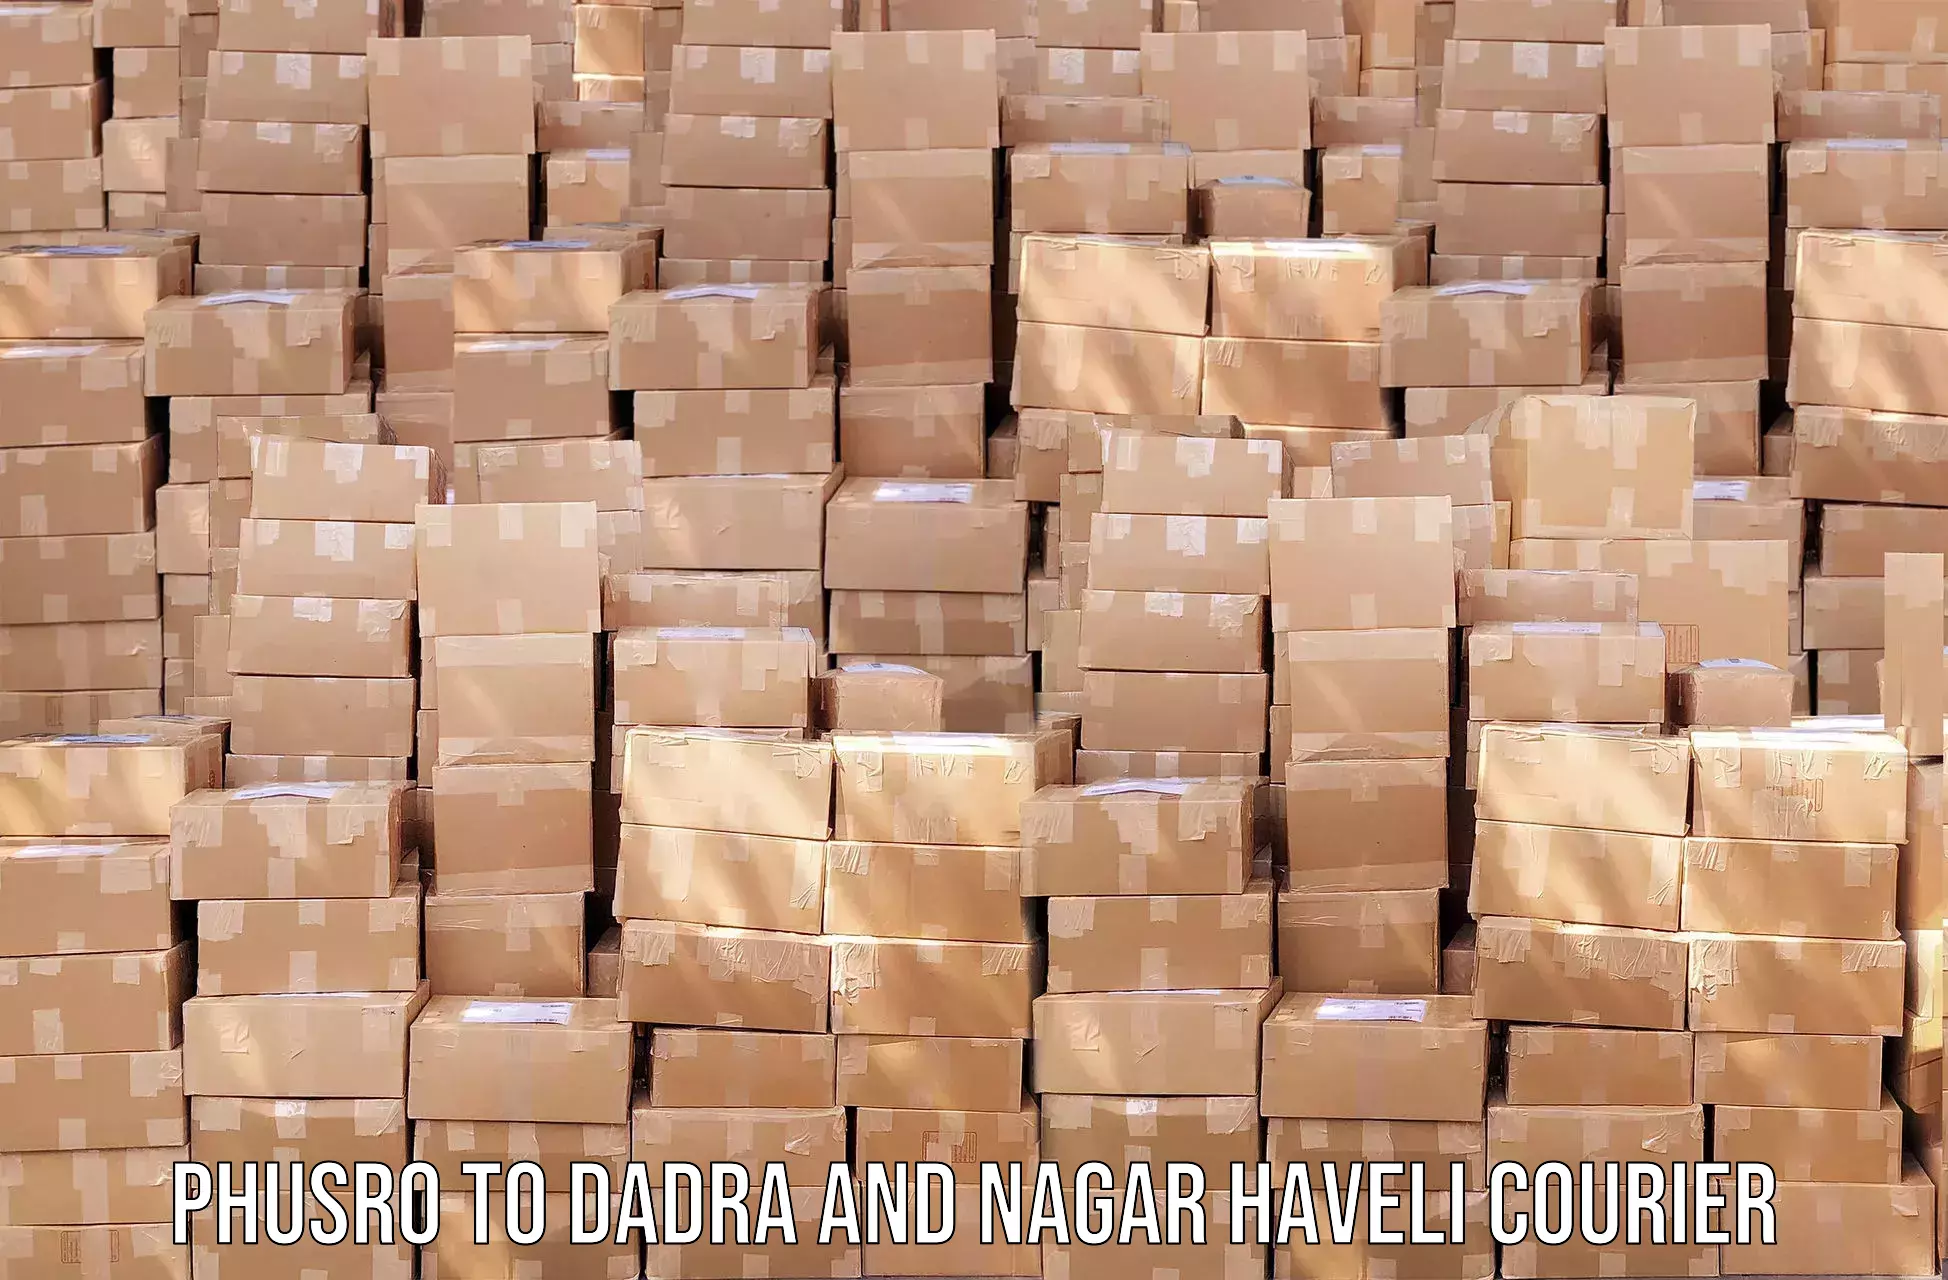 Efficient cargo handling in Phusro to Dadra and Nagar Haveli